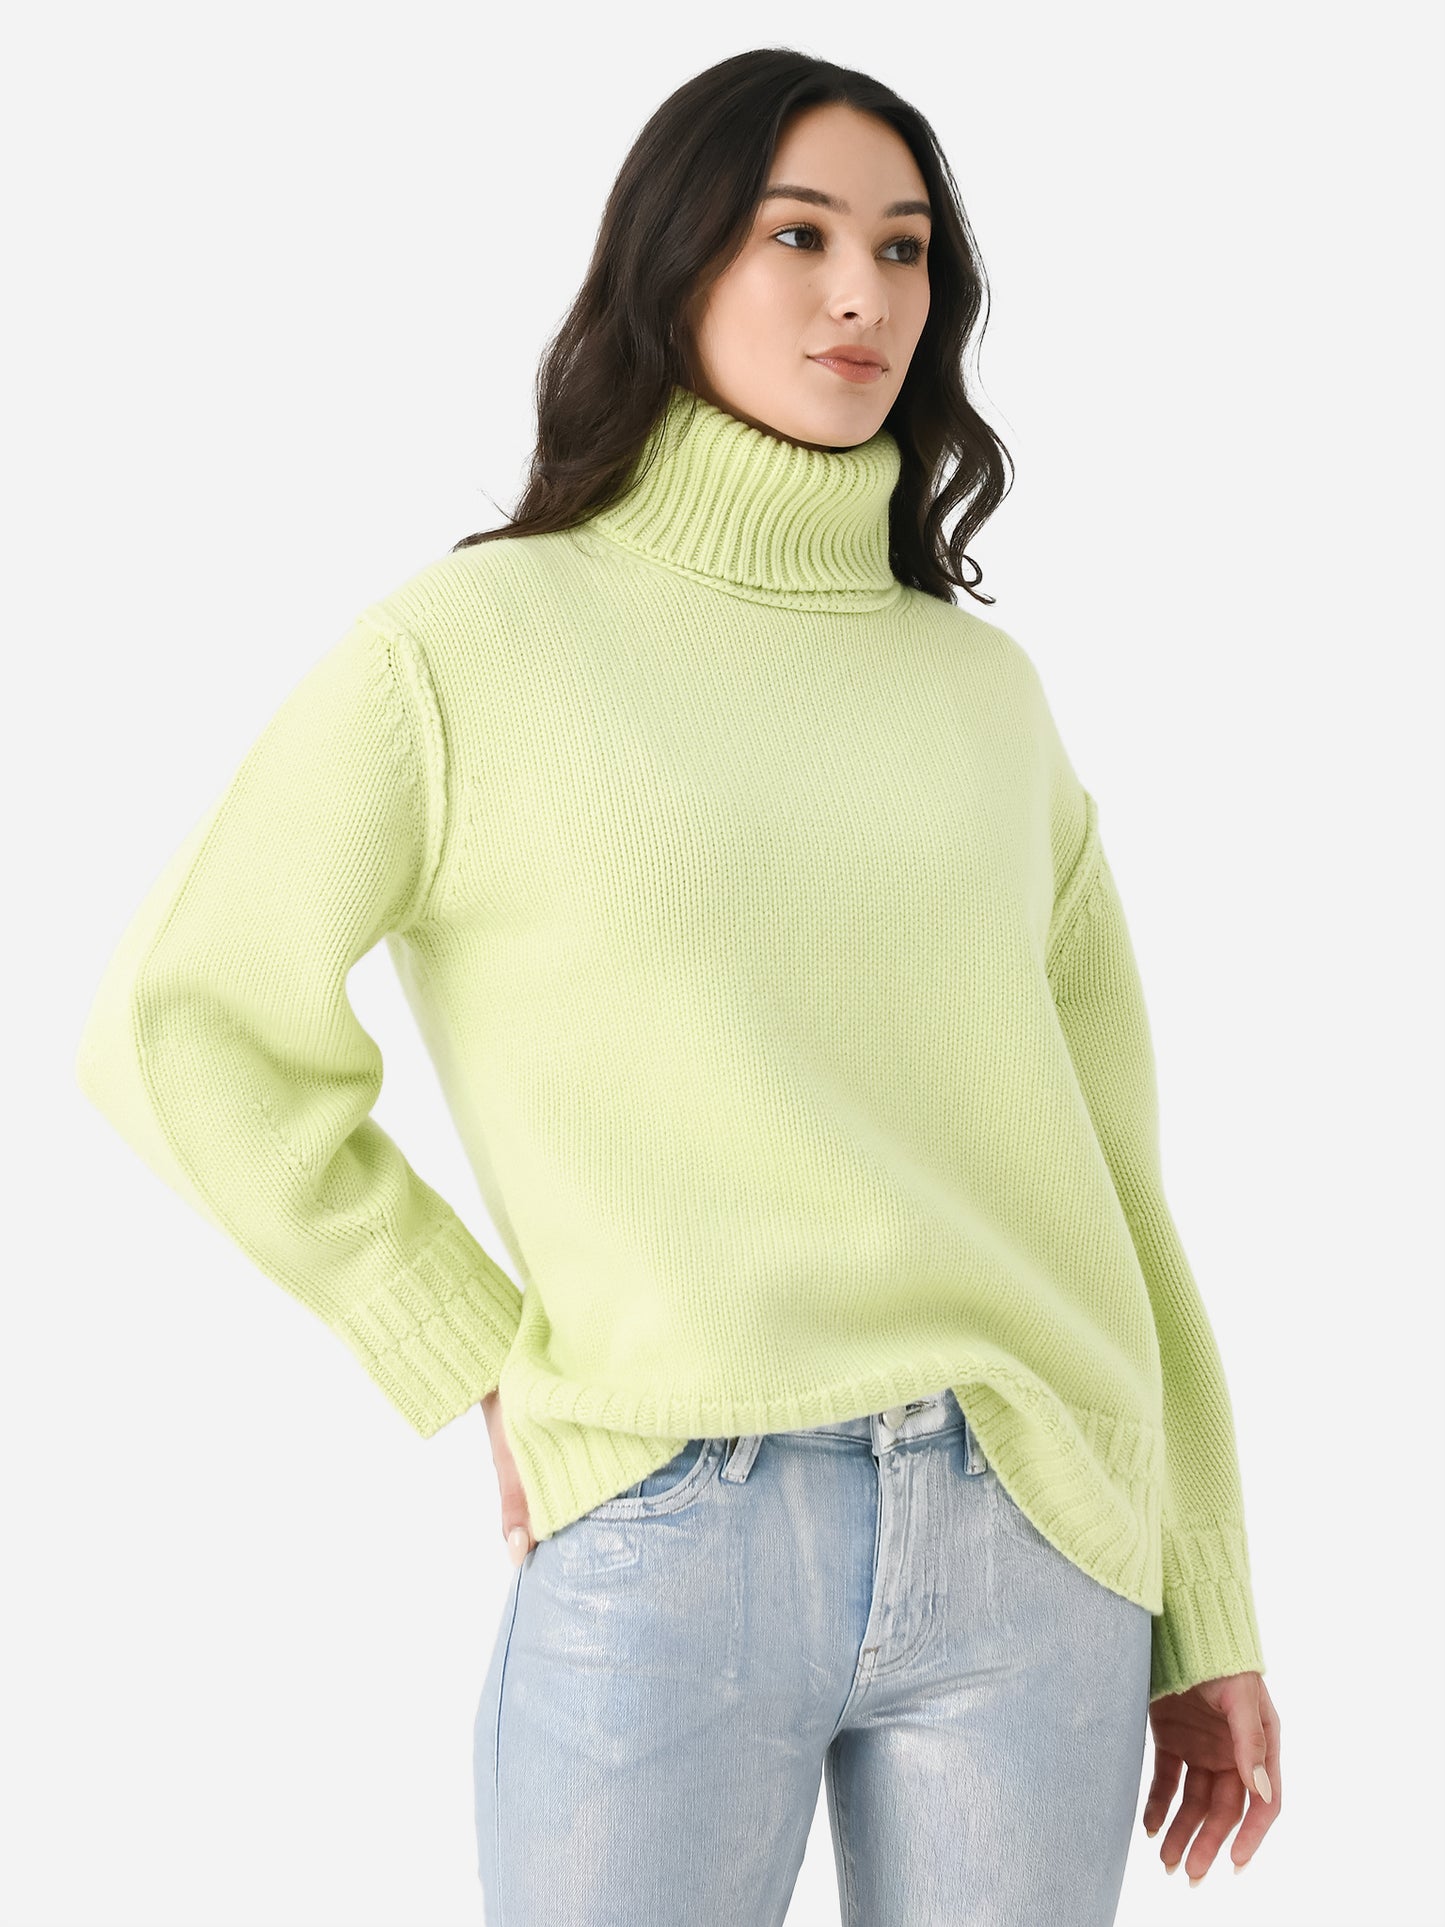 Simkhai Women's Leylani Turtleneck Sweater